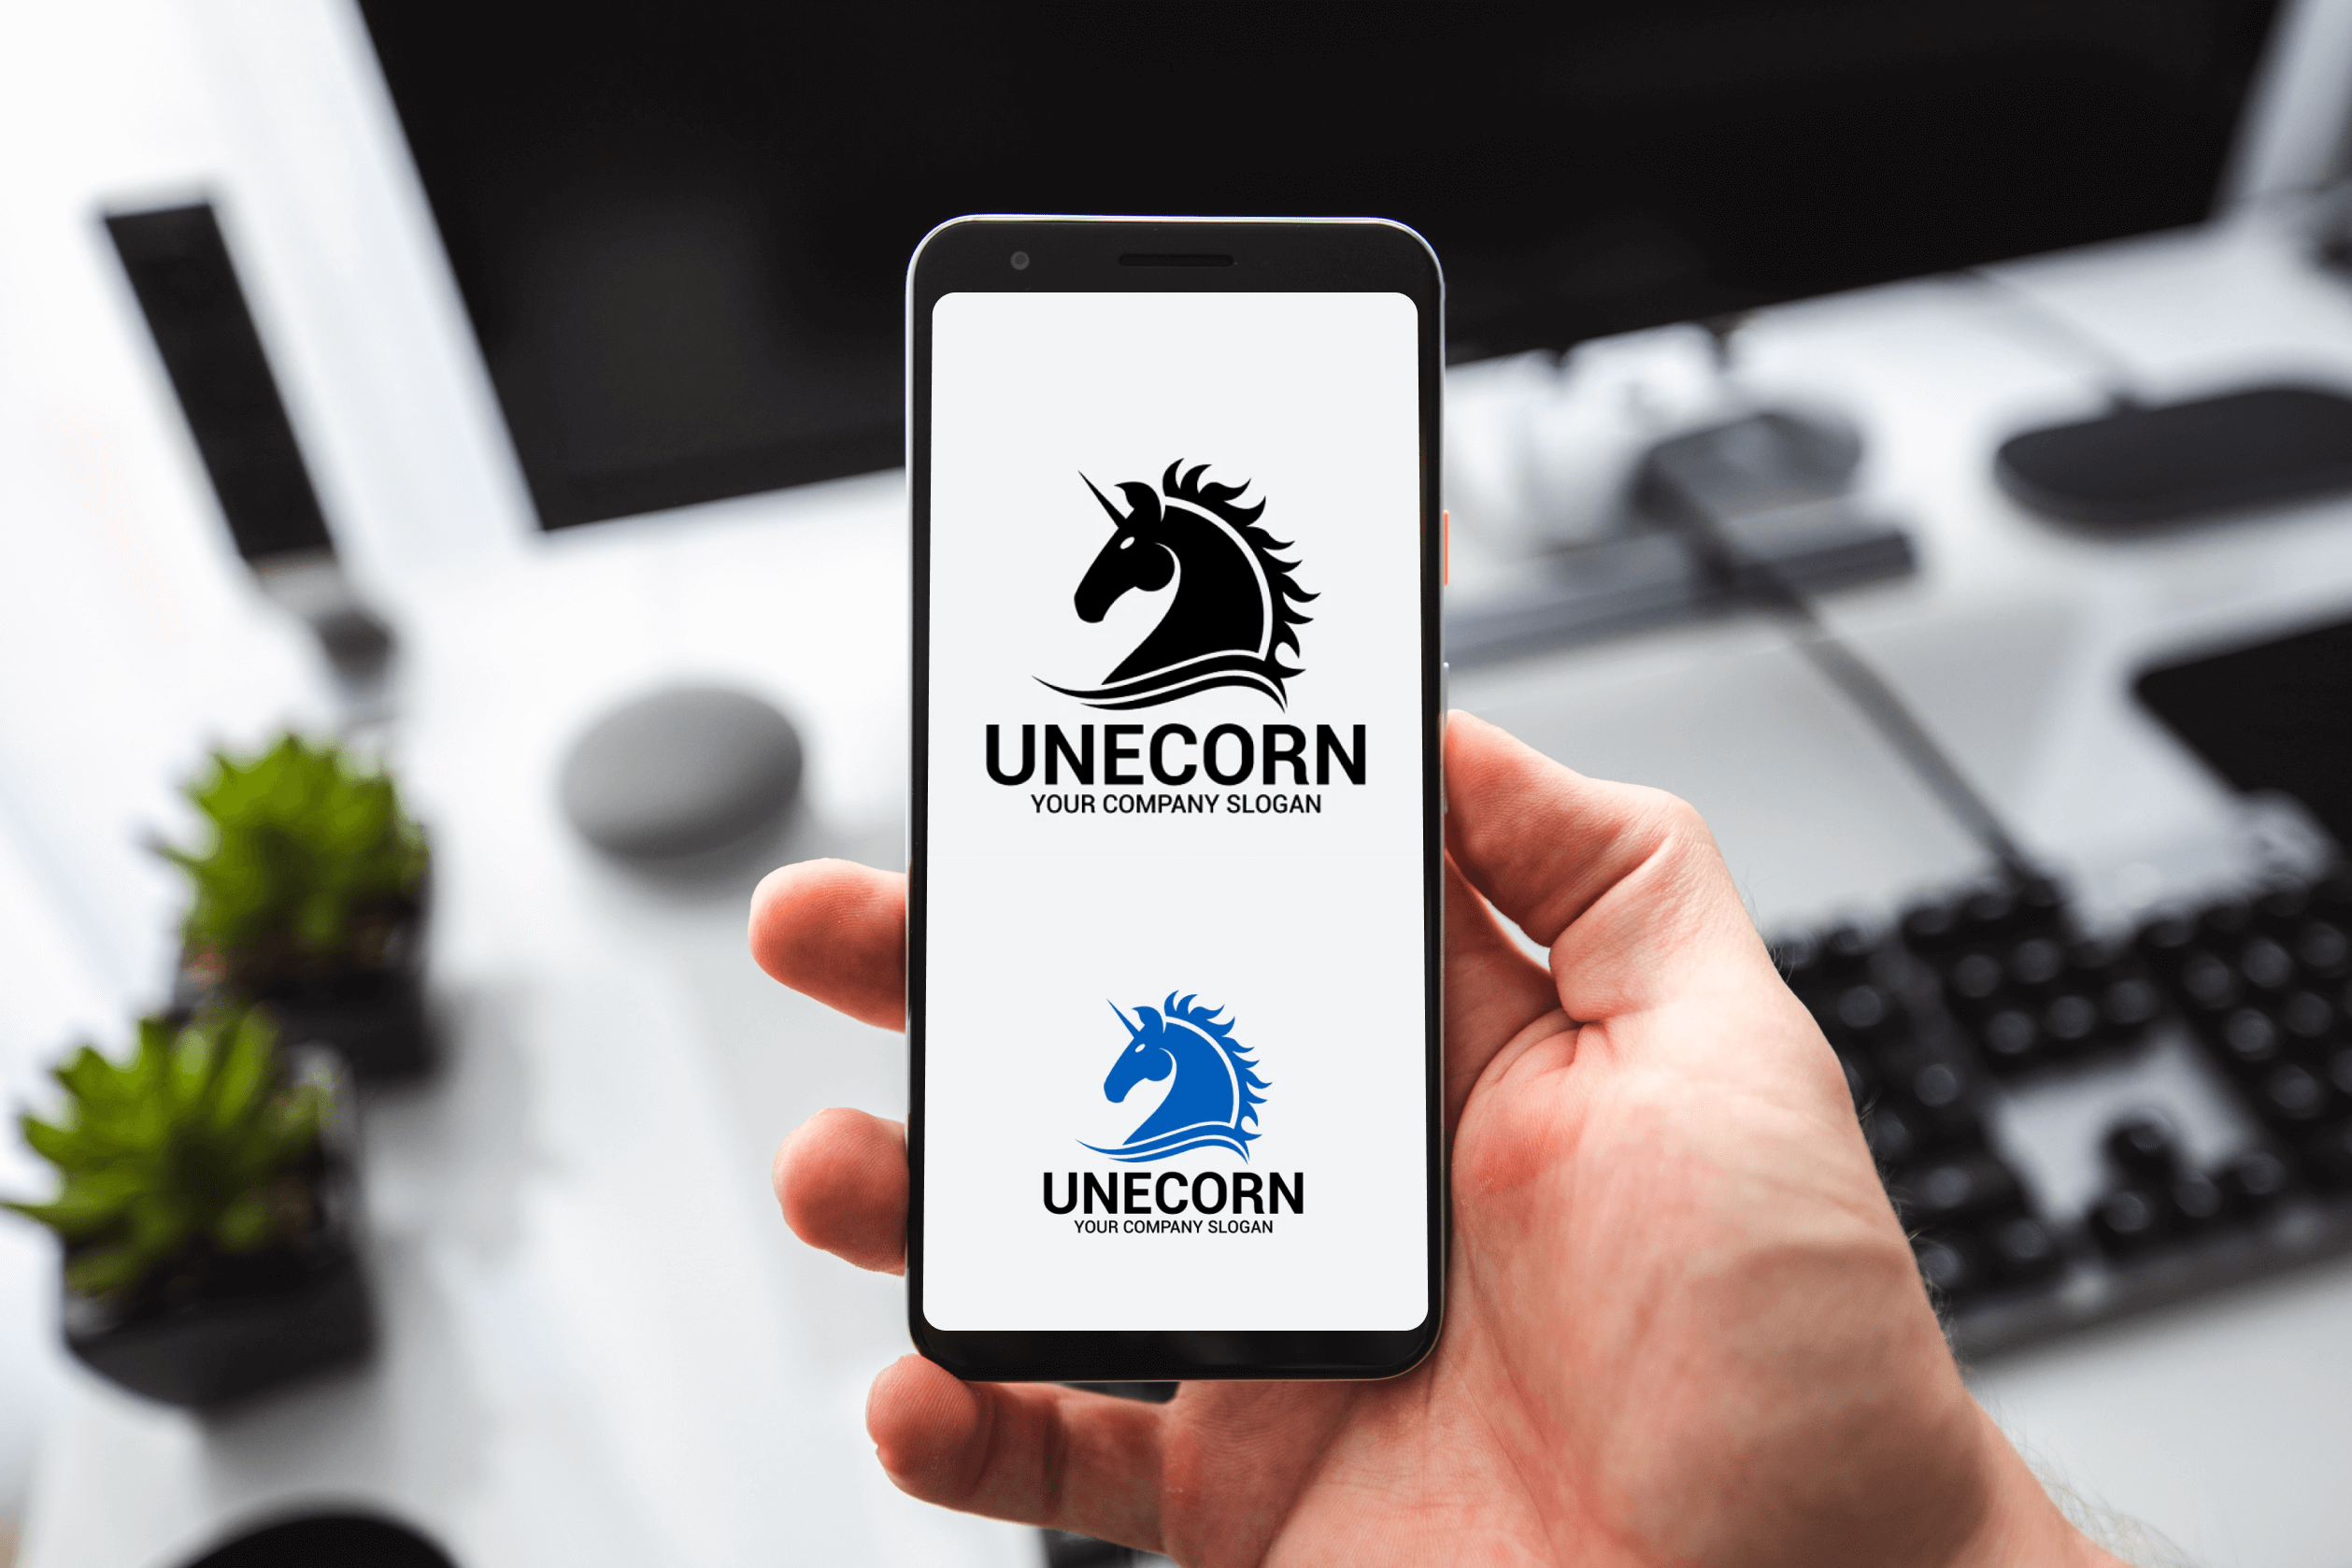 Unecorn concept design on phone.